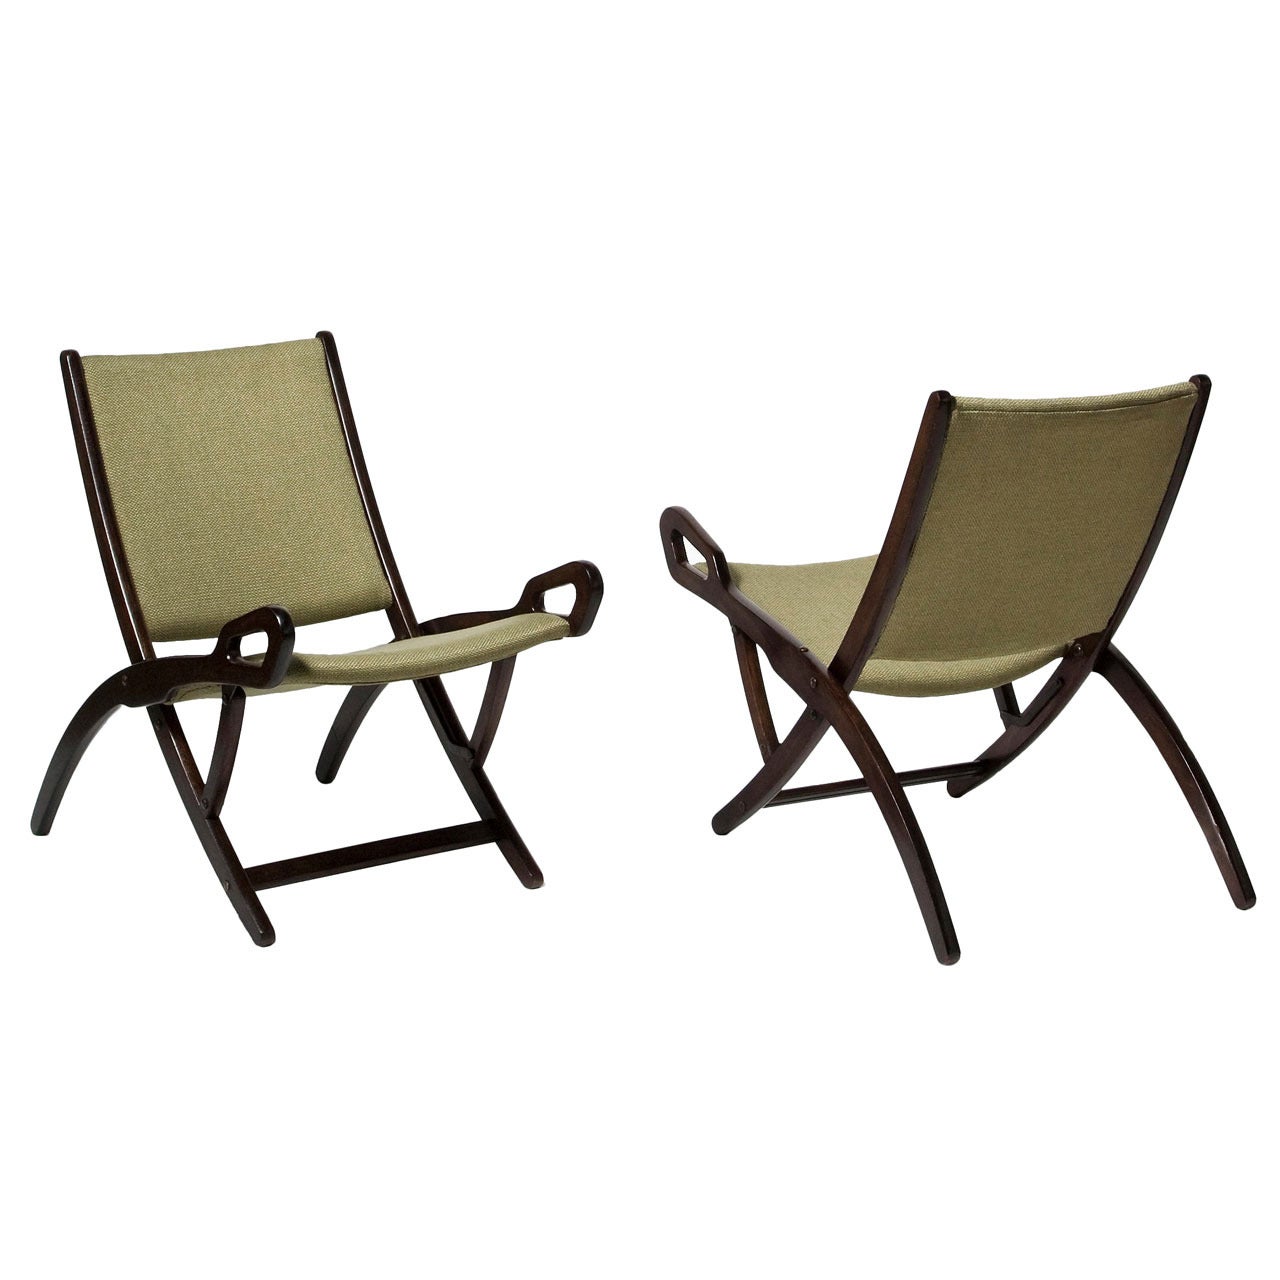 Gio Ponti "Ninfea" Folding Chairs